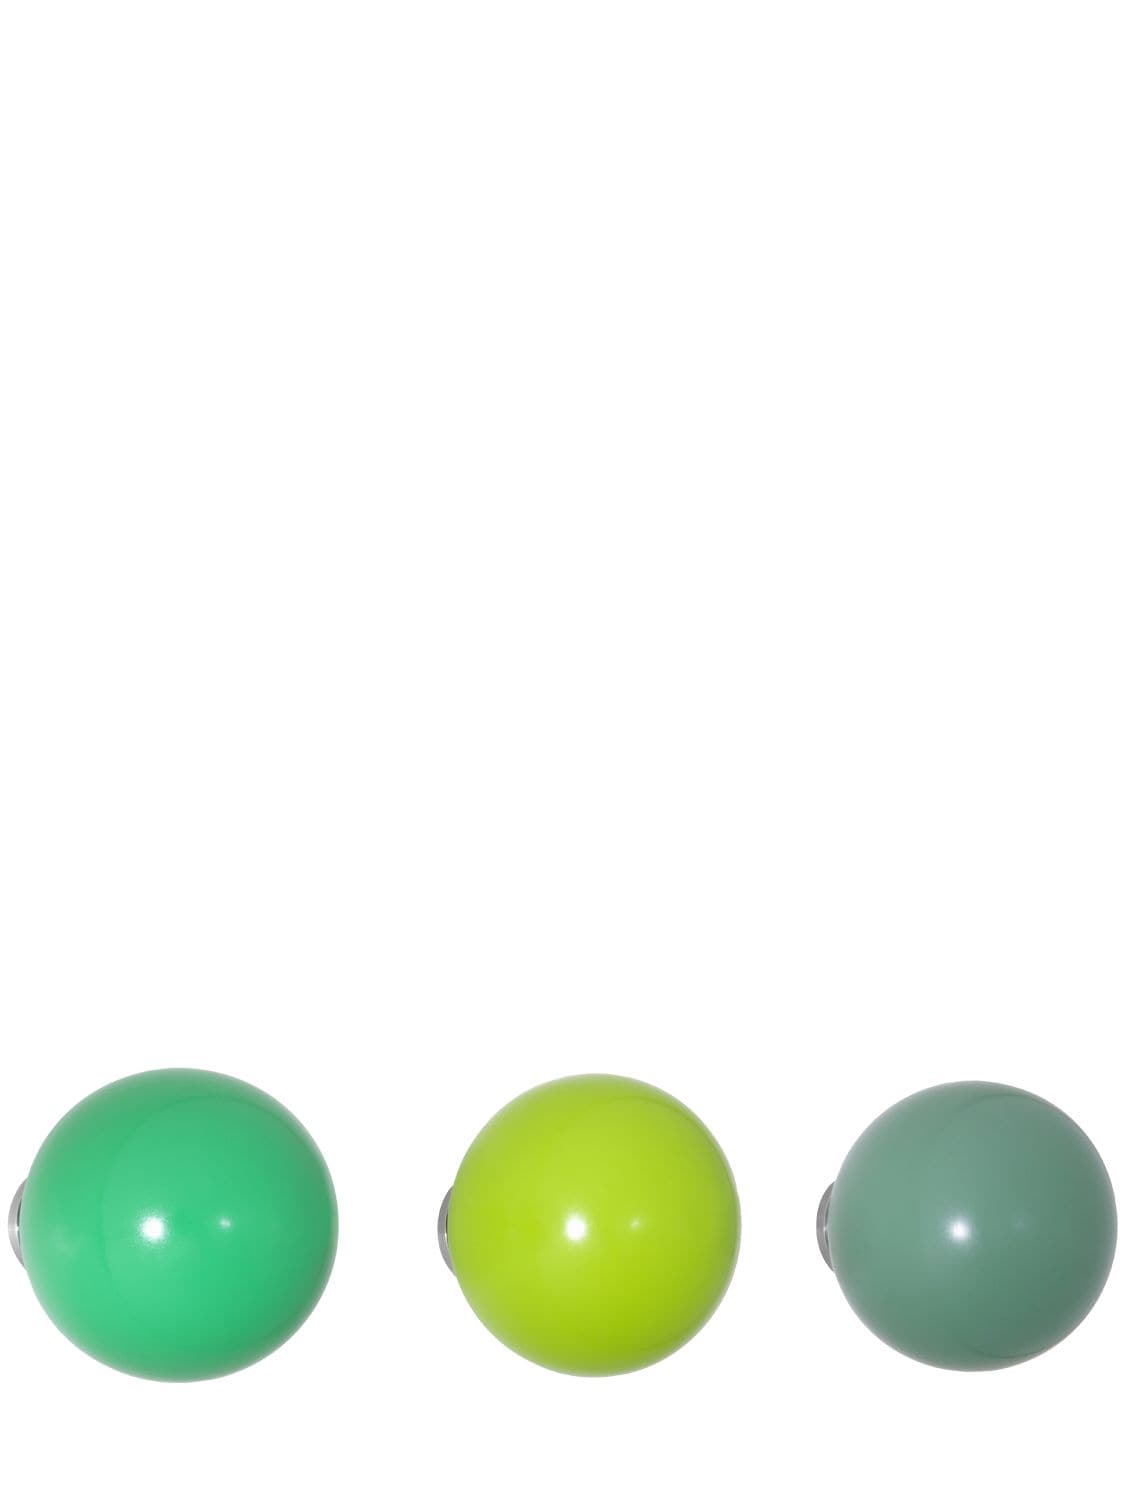 Image of Set Of 3 Green Coat Dots